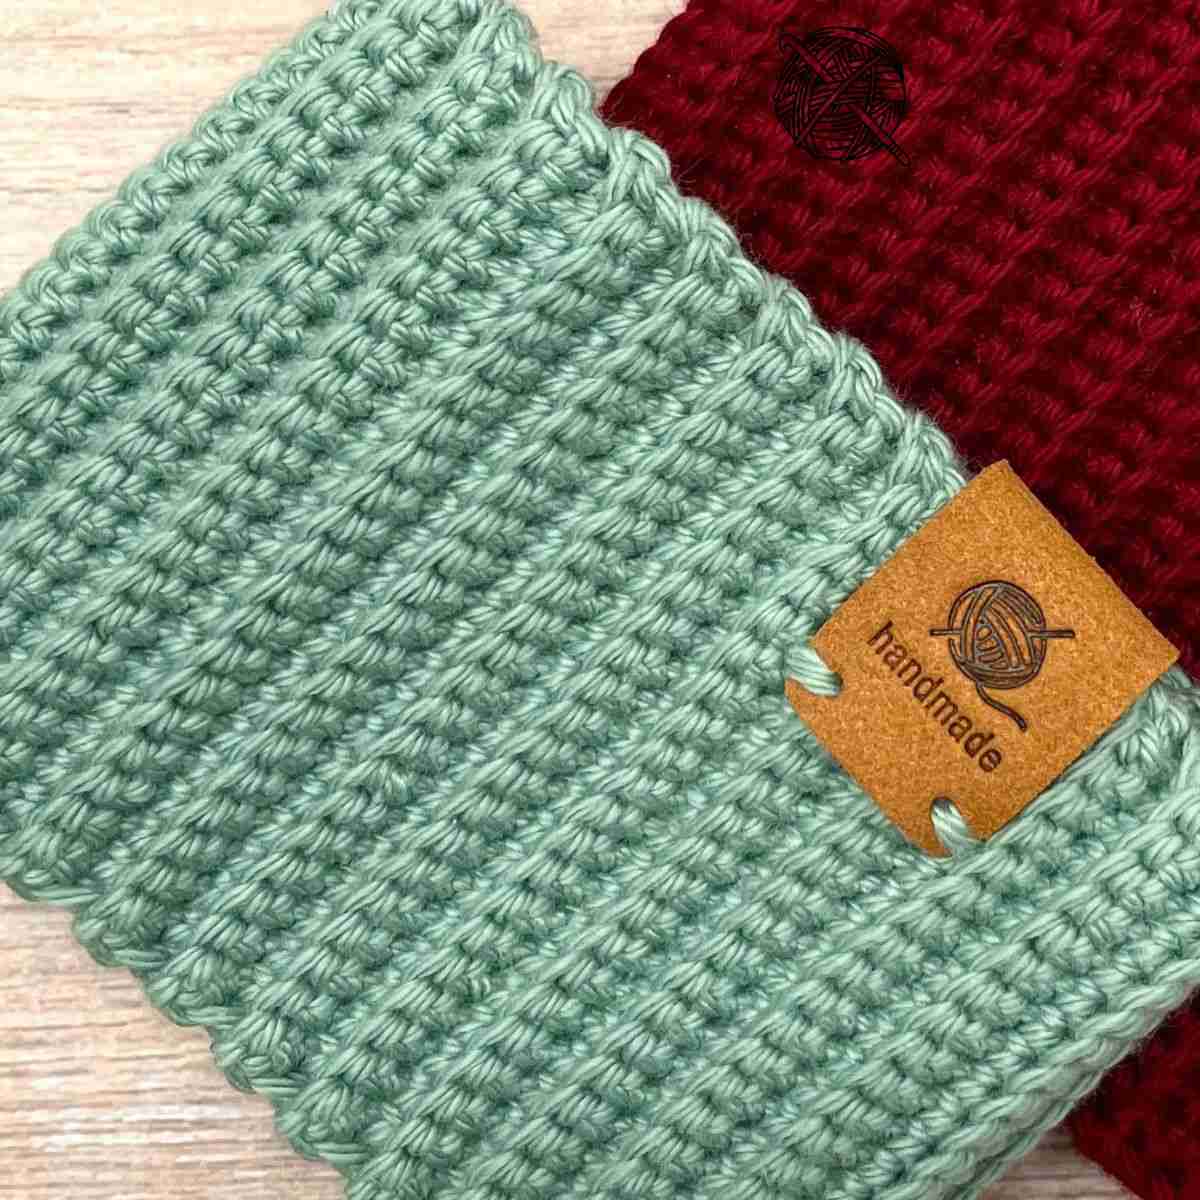 How to make single crochet ribbing stitch tutorial